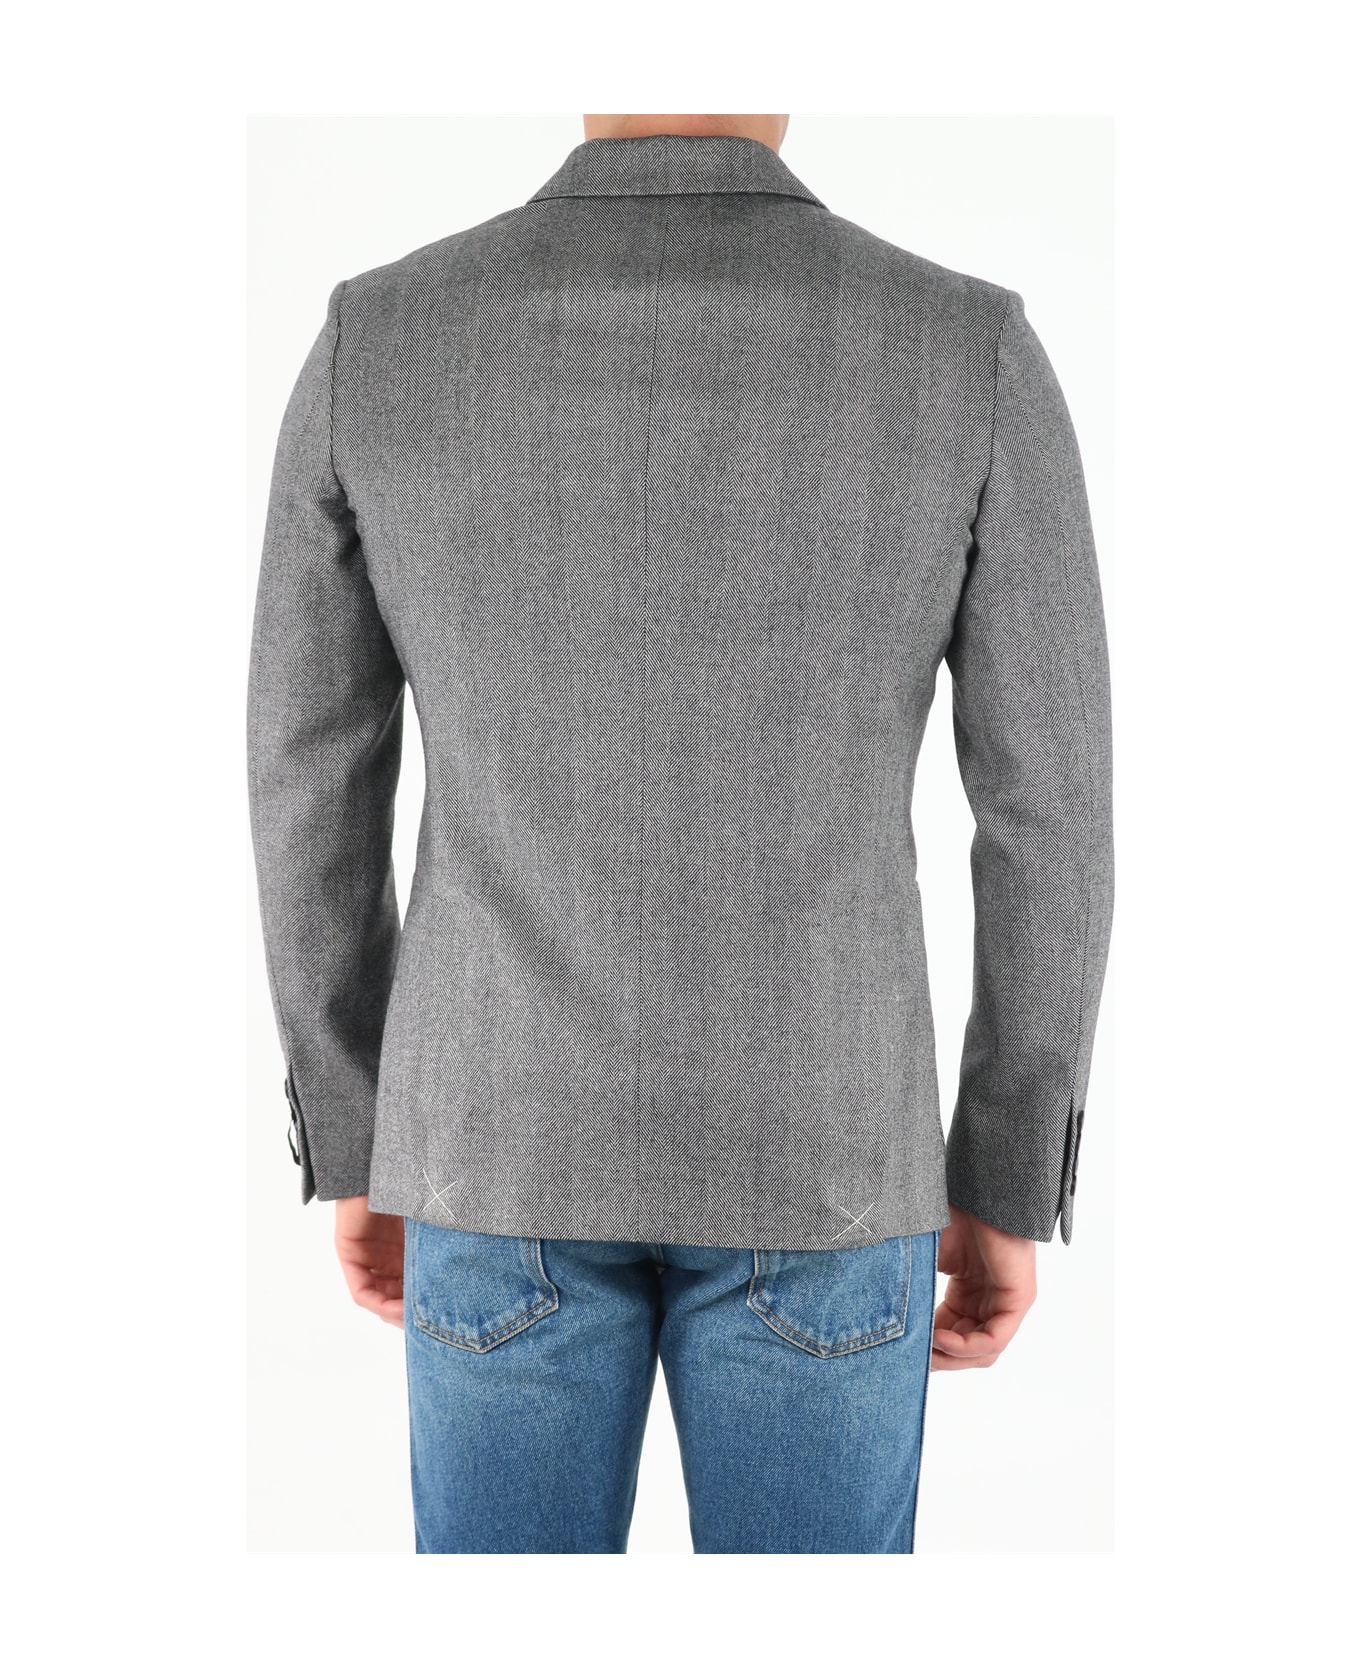 Tonello Grey Wool Jacket - GREY ブレザー